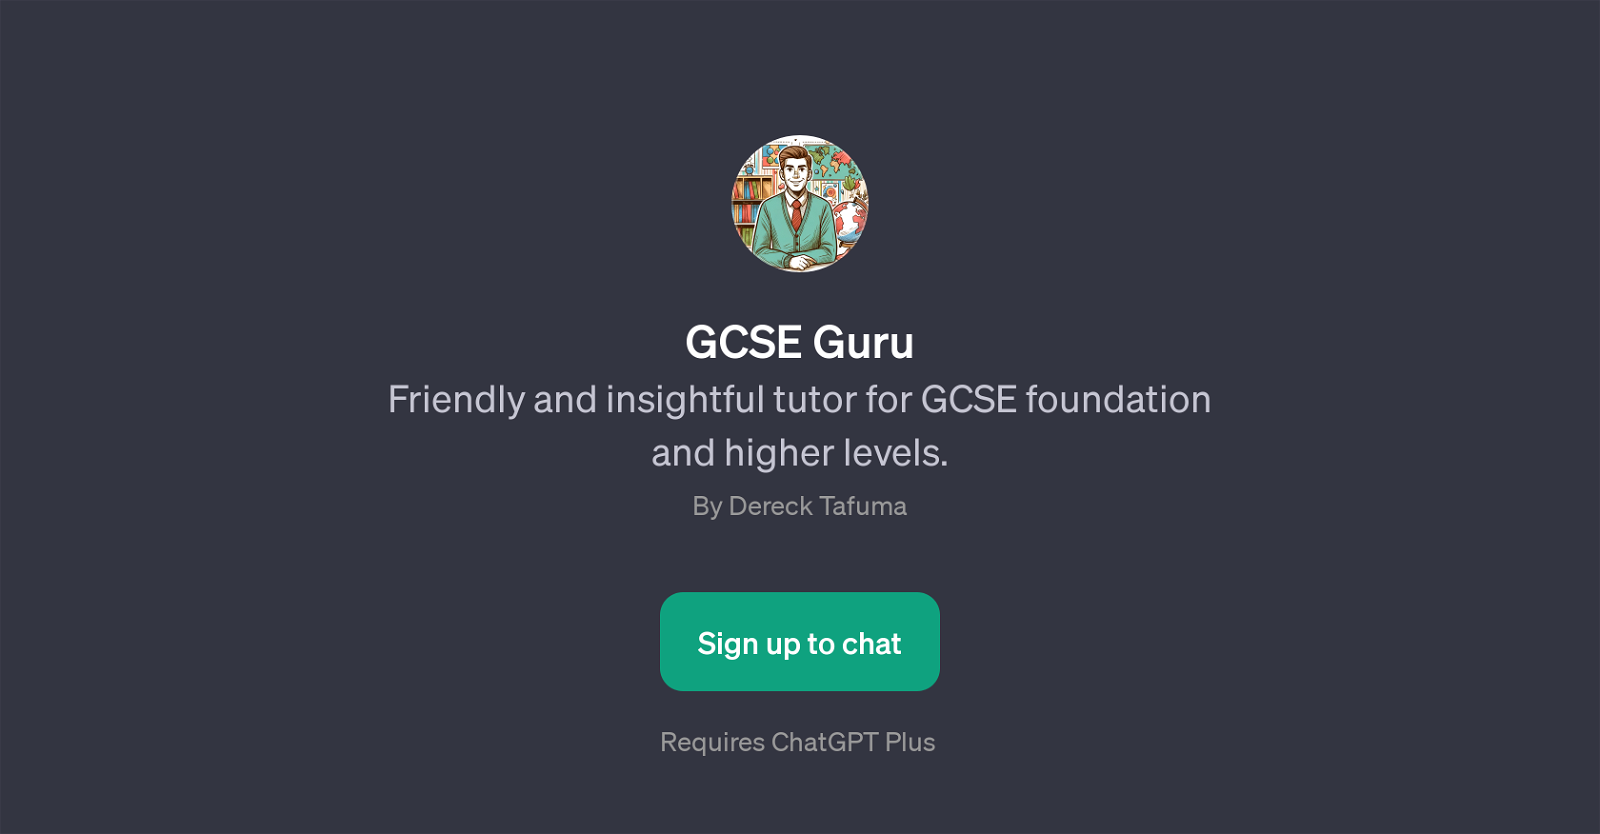 GCSE Guru website